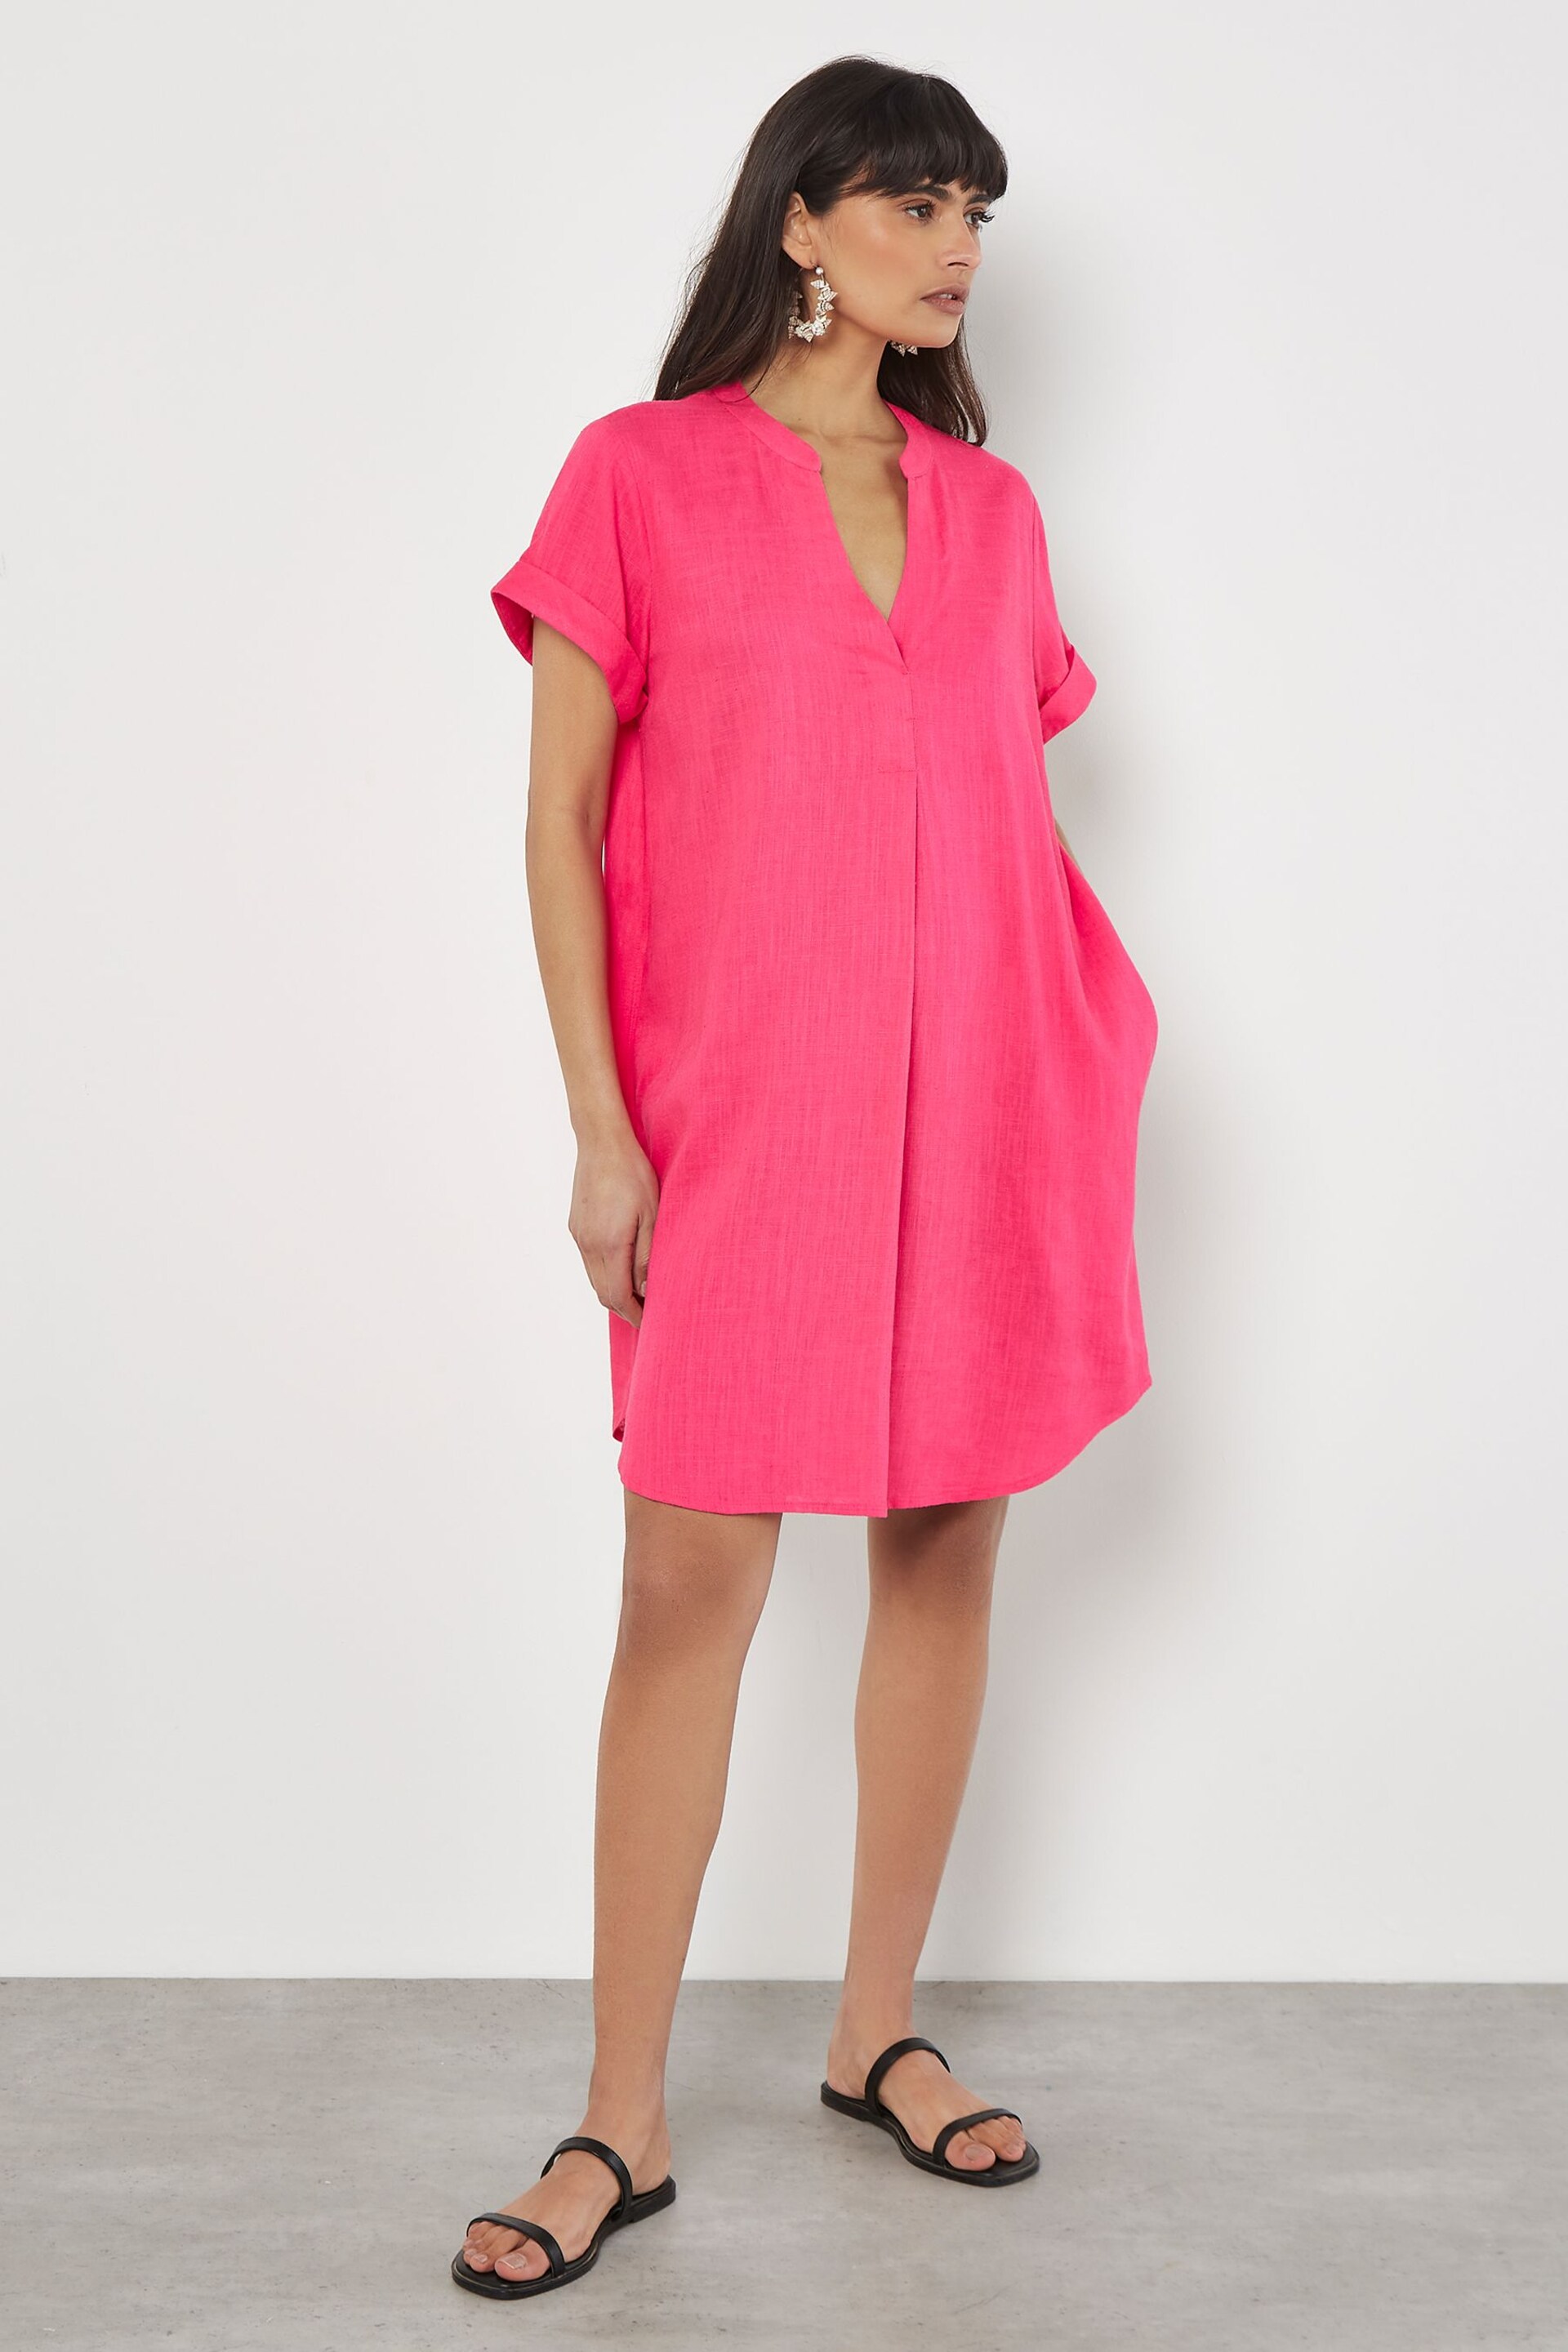 Apricot Pink Front Pleat V-Neck Mix Dress - Image 1 of 4